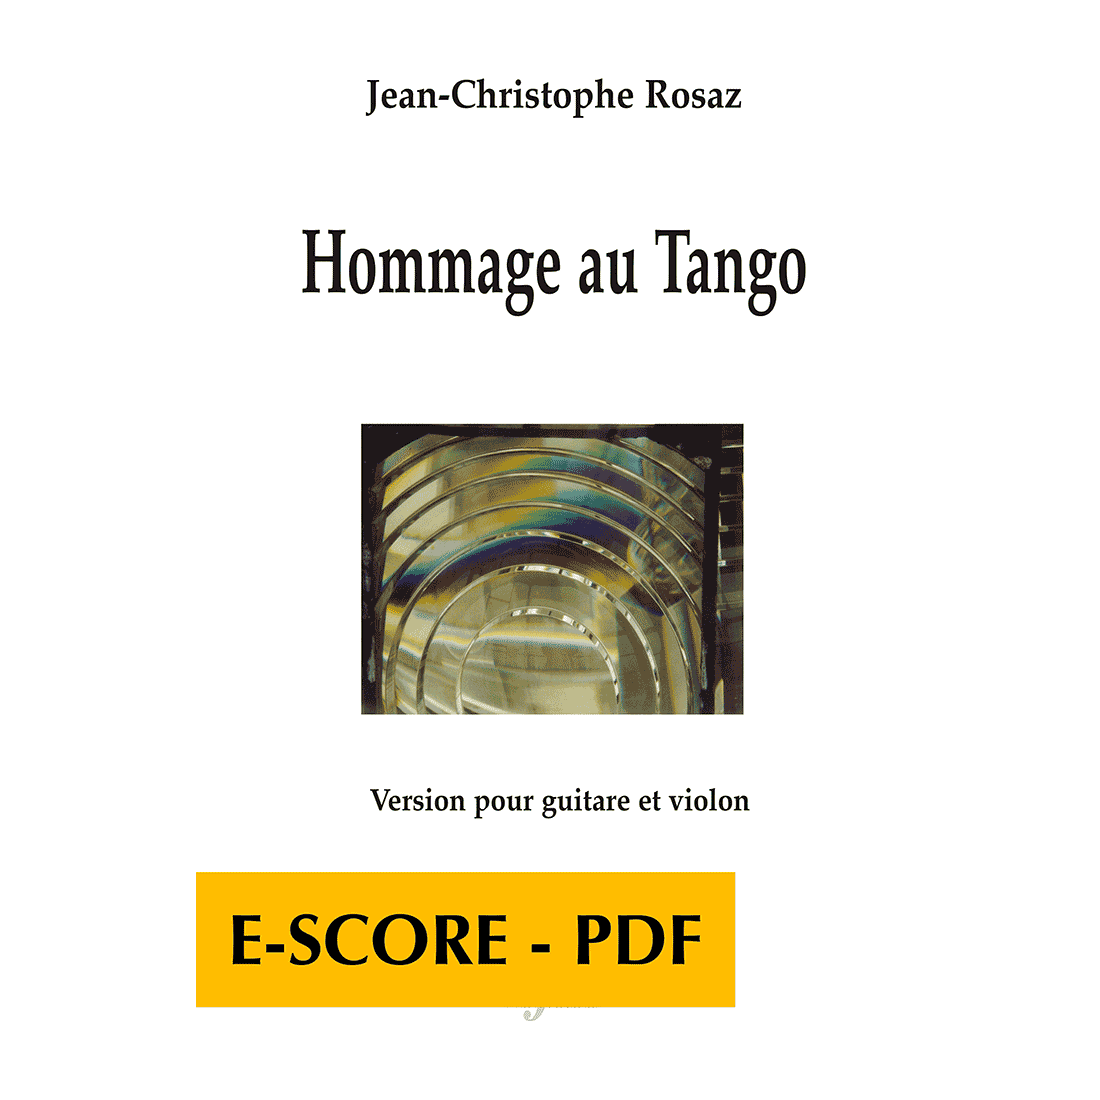 Hommage au Tango for guitar and violin - E-score PDF